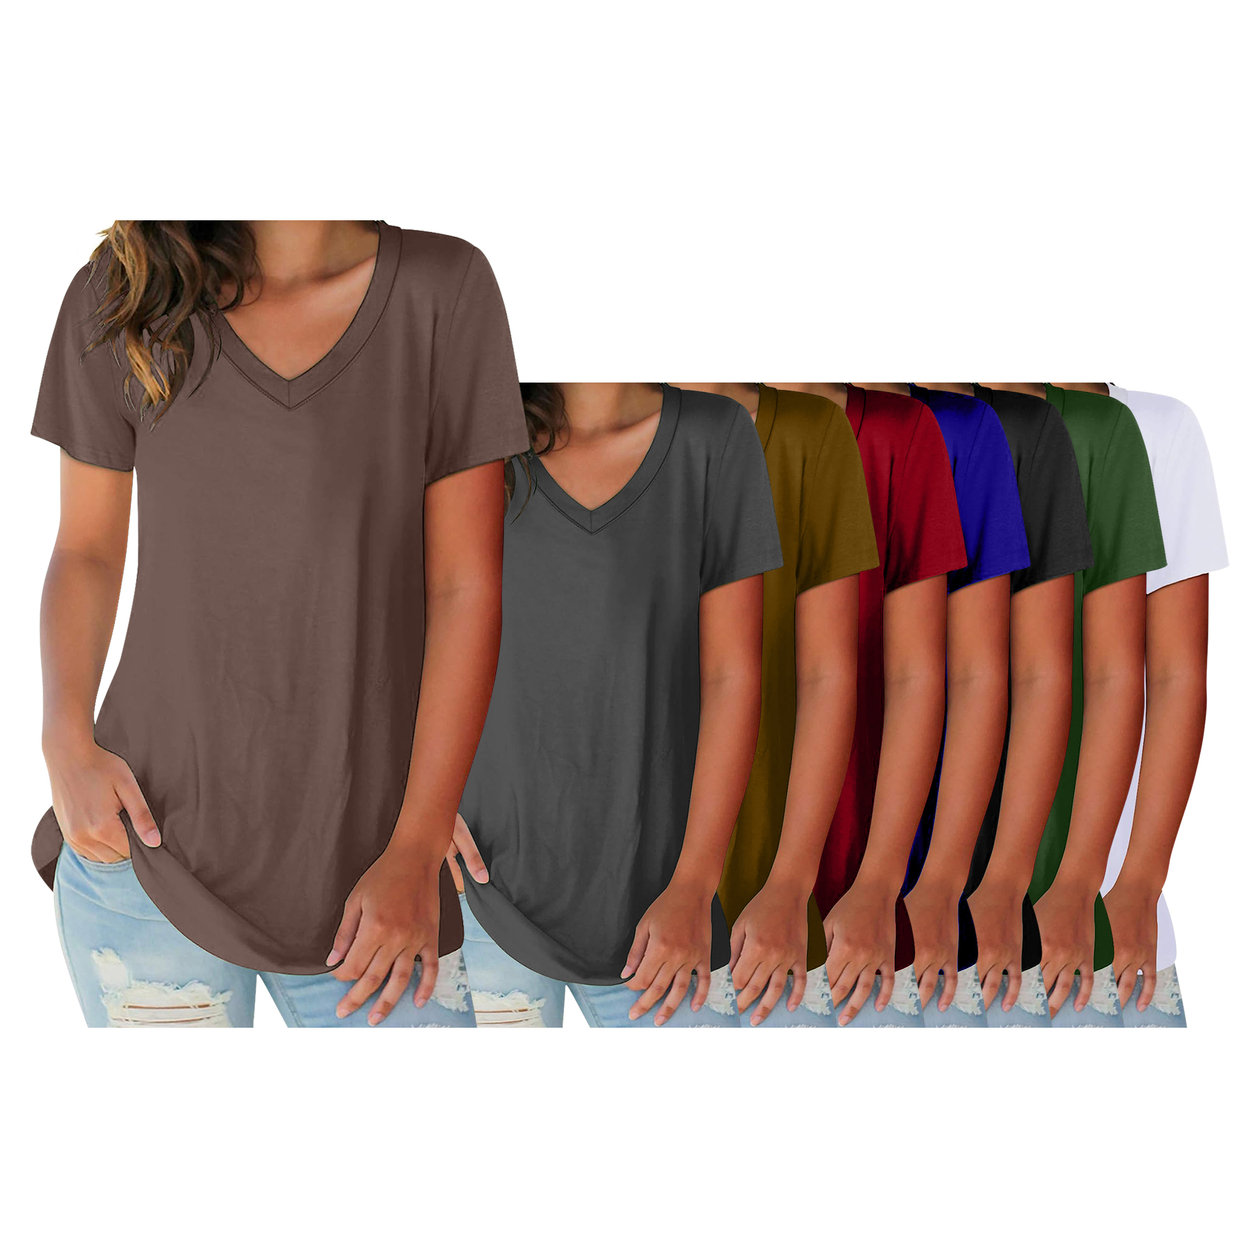 Women's Ultra-Soft Smooth Cotton Blend Basic V-Neck Short Sleeve Shirts - Mustard, Small